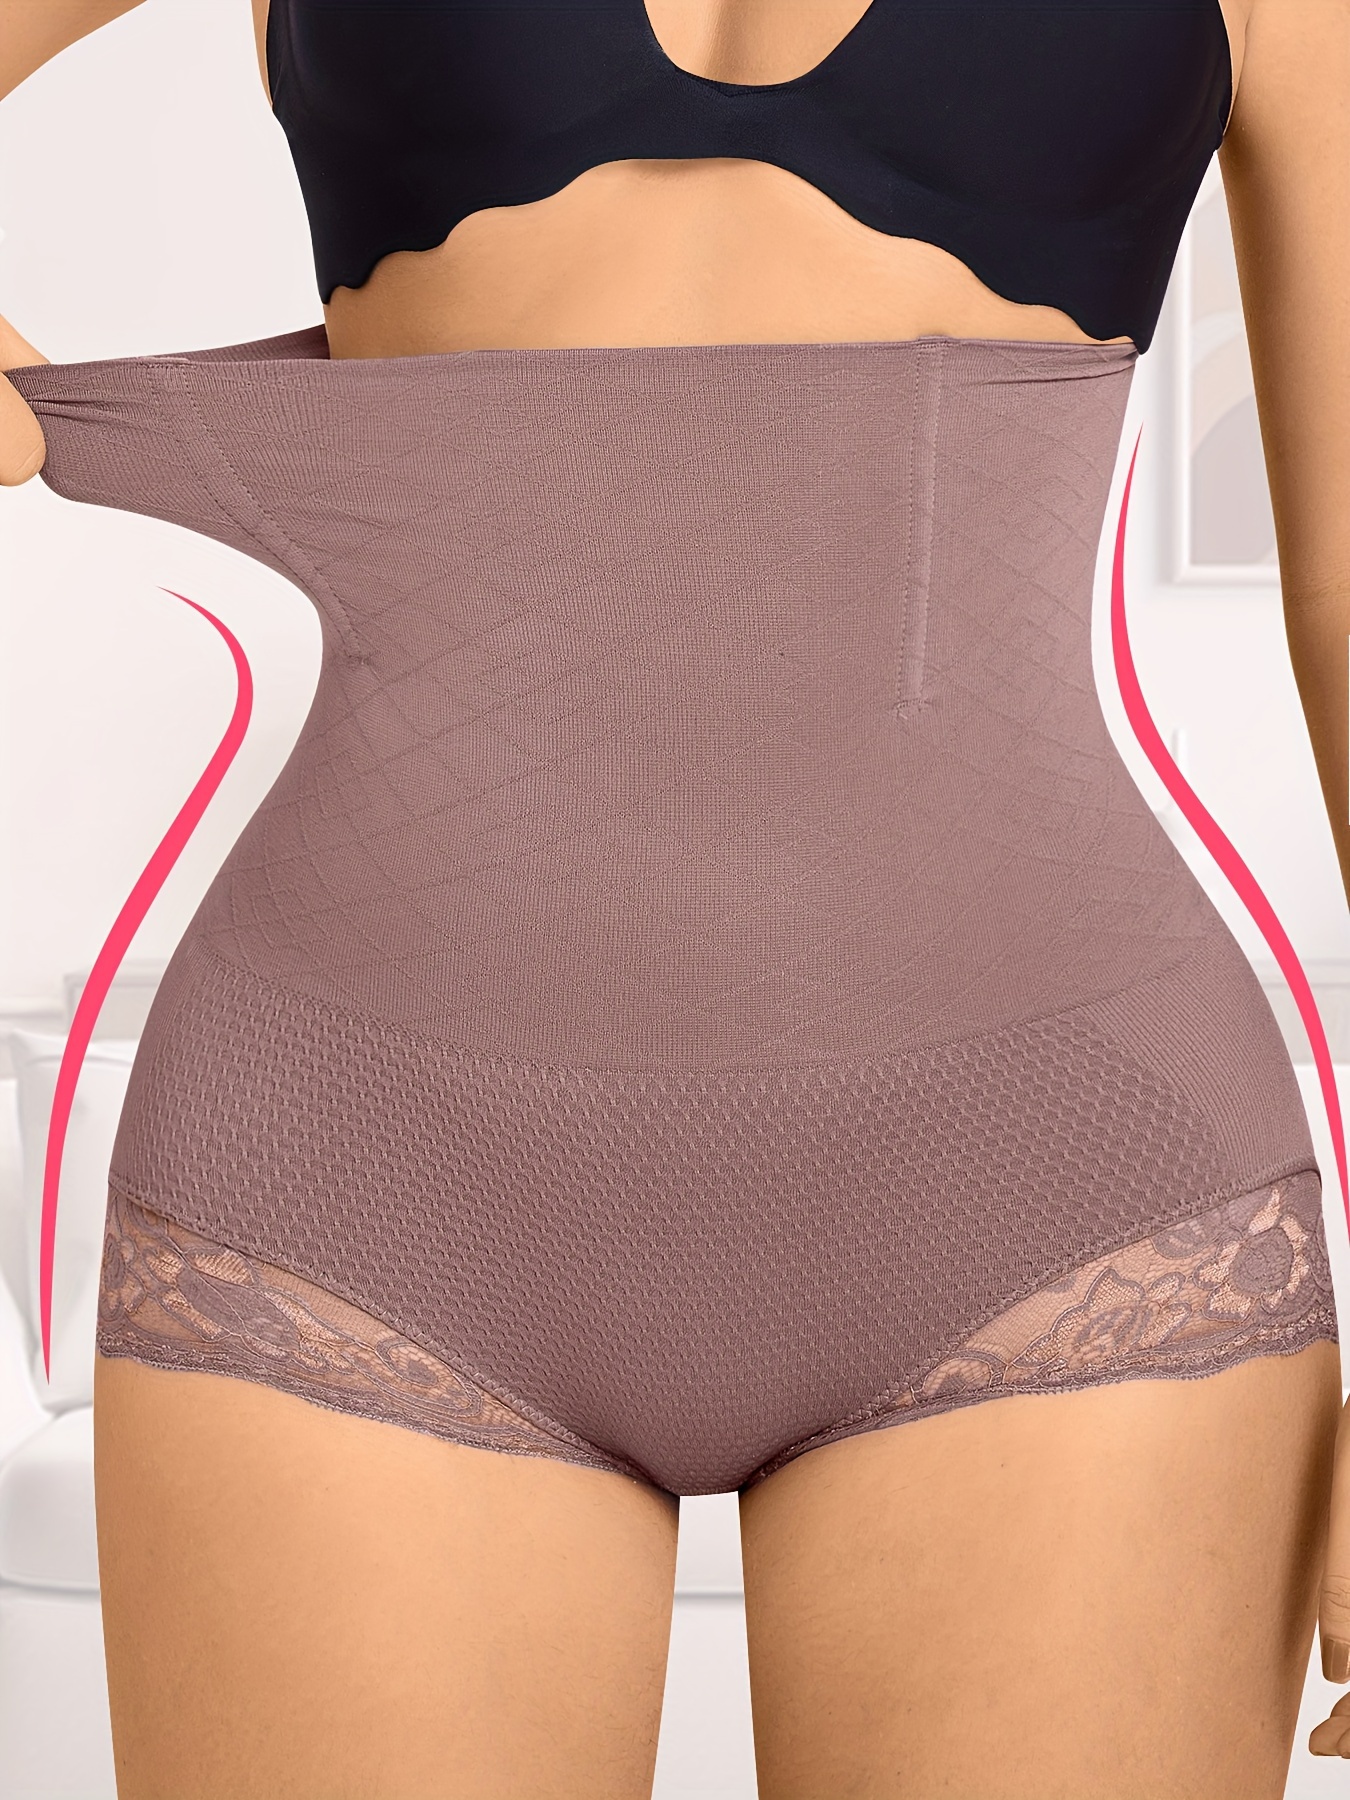 Women's Slimming Shapewear Panties Smooth Tummy Control High Waist